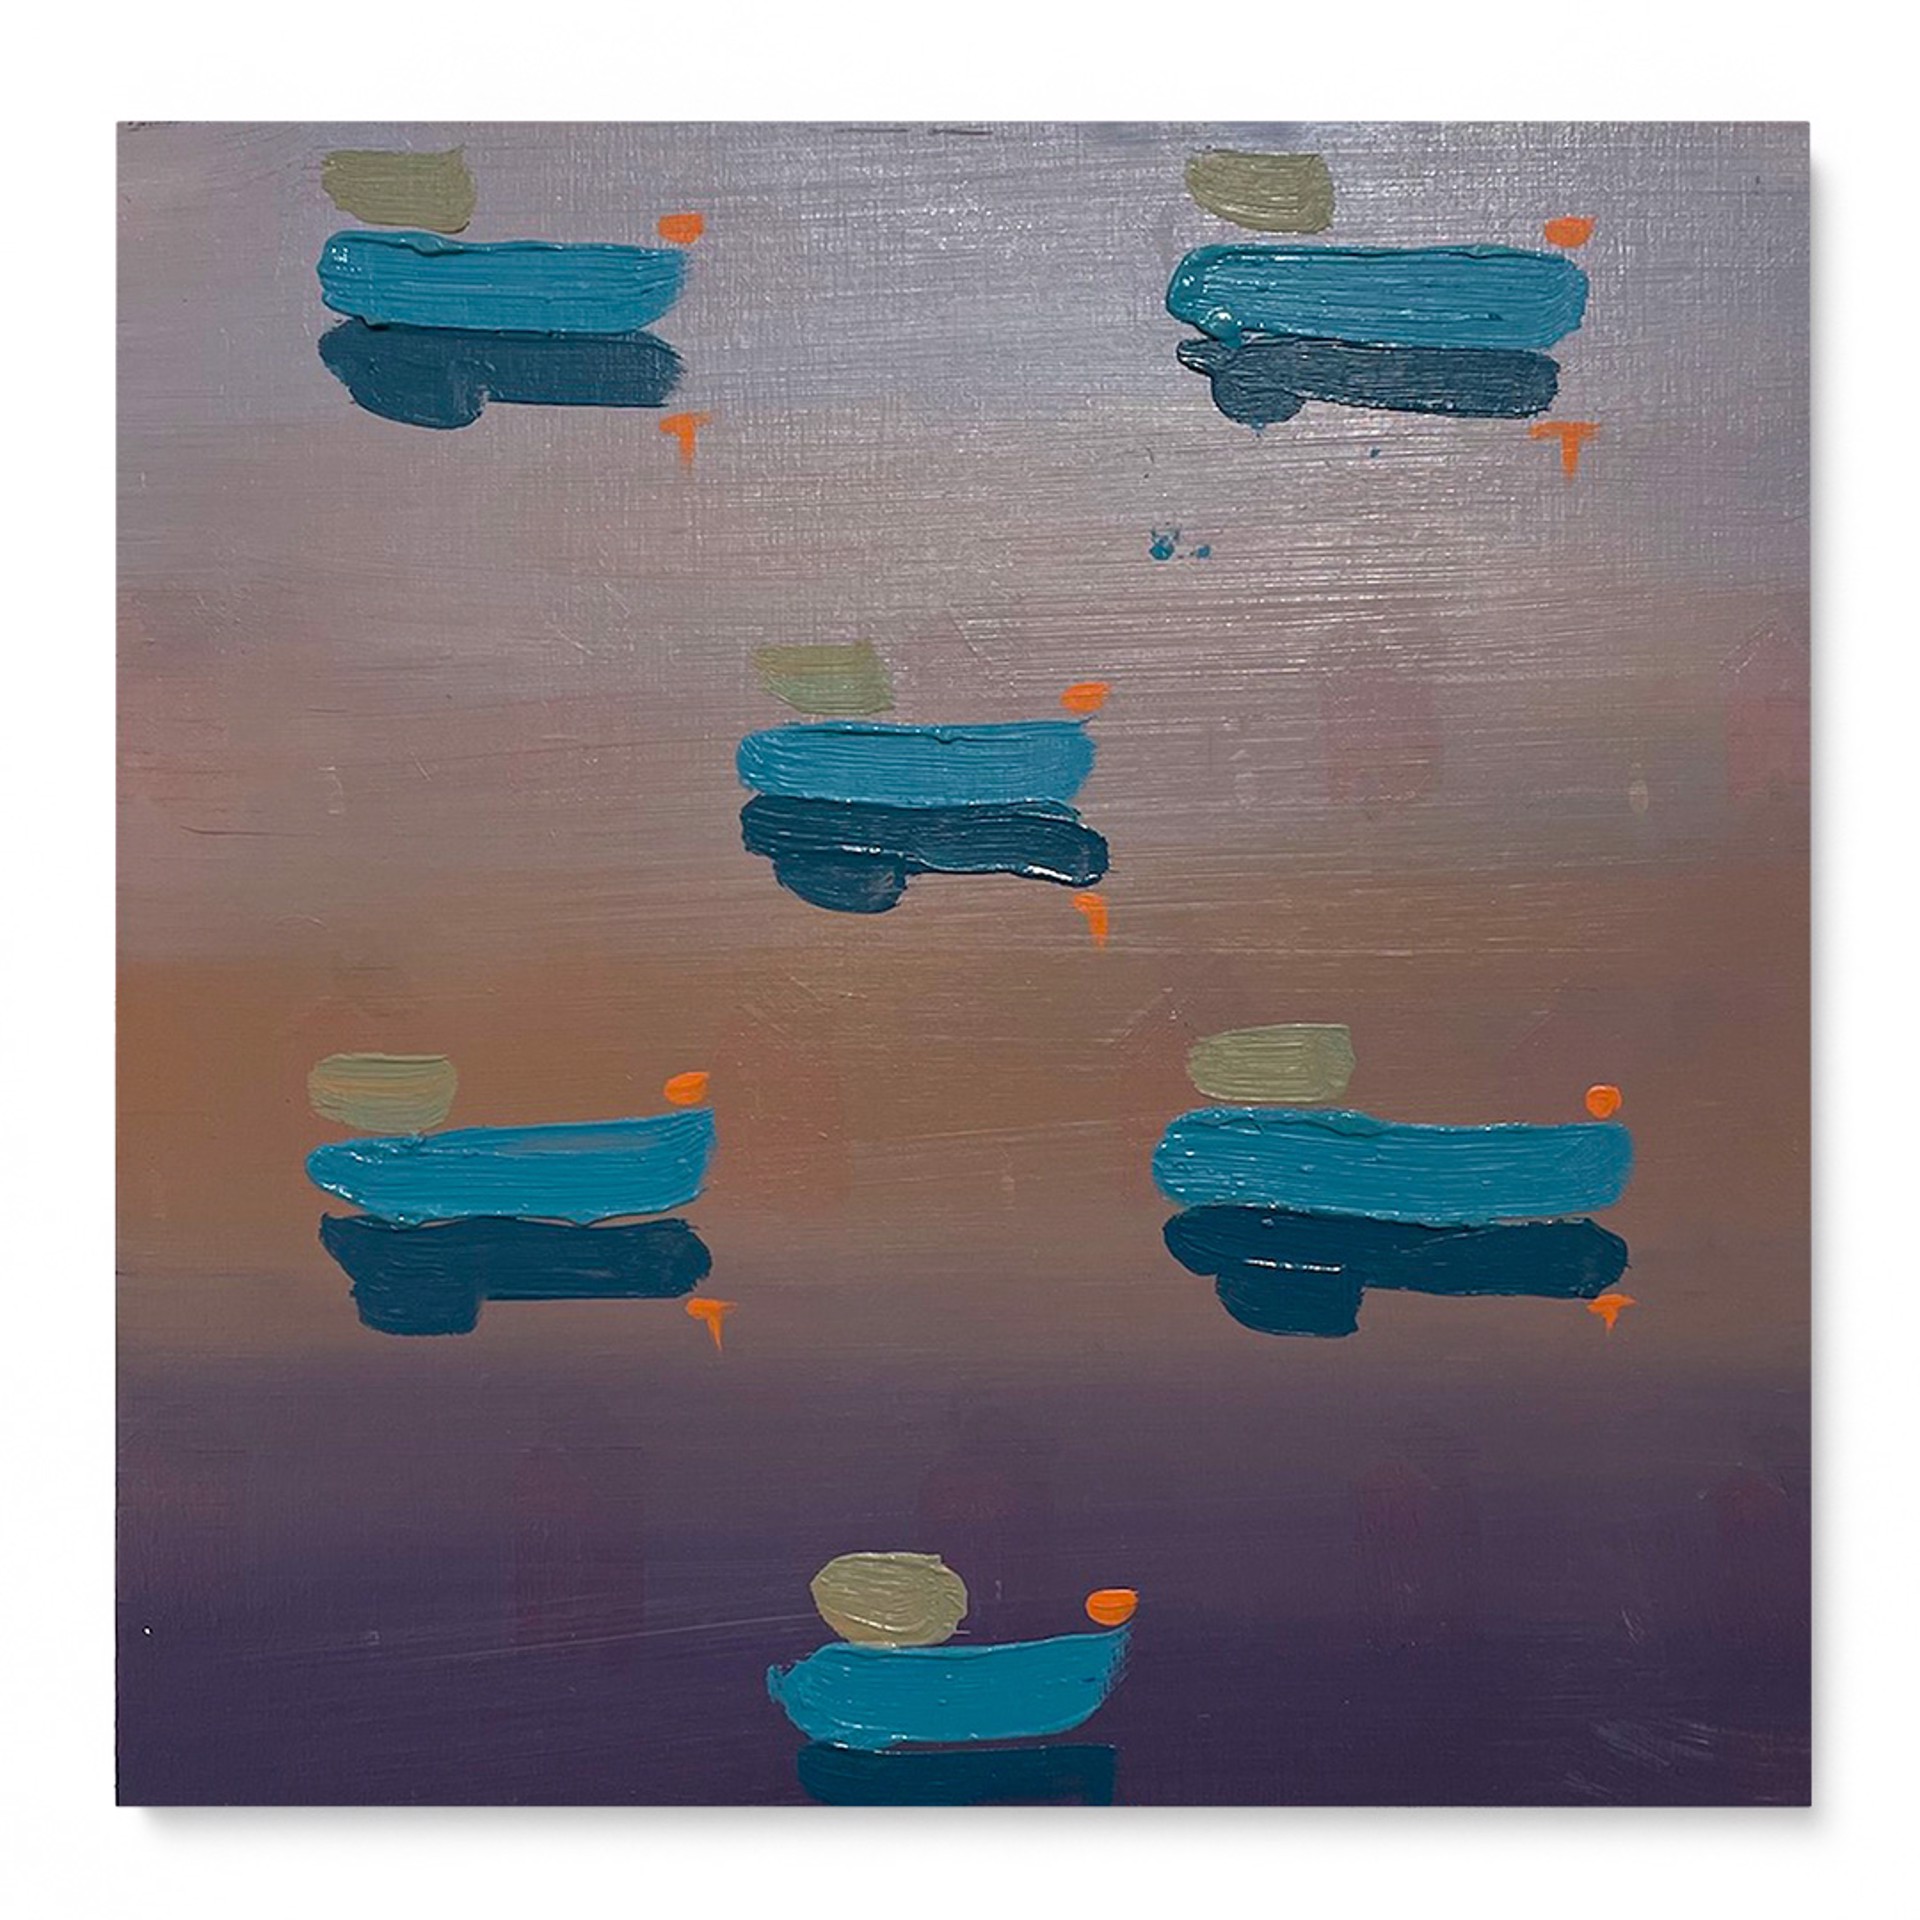 Ships at twilight by Dan Pelonis